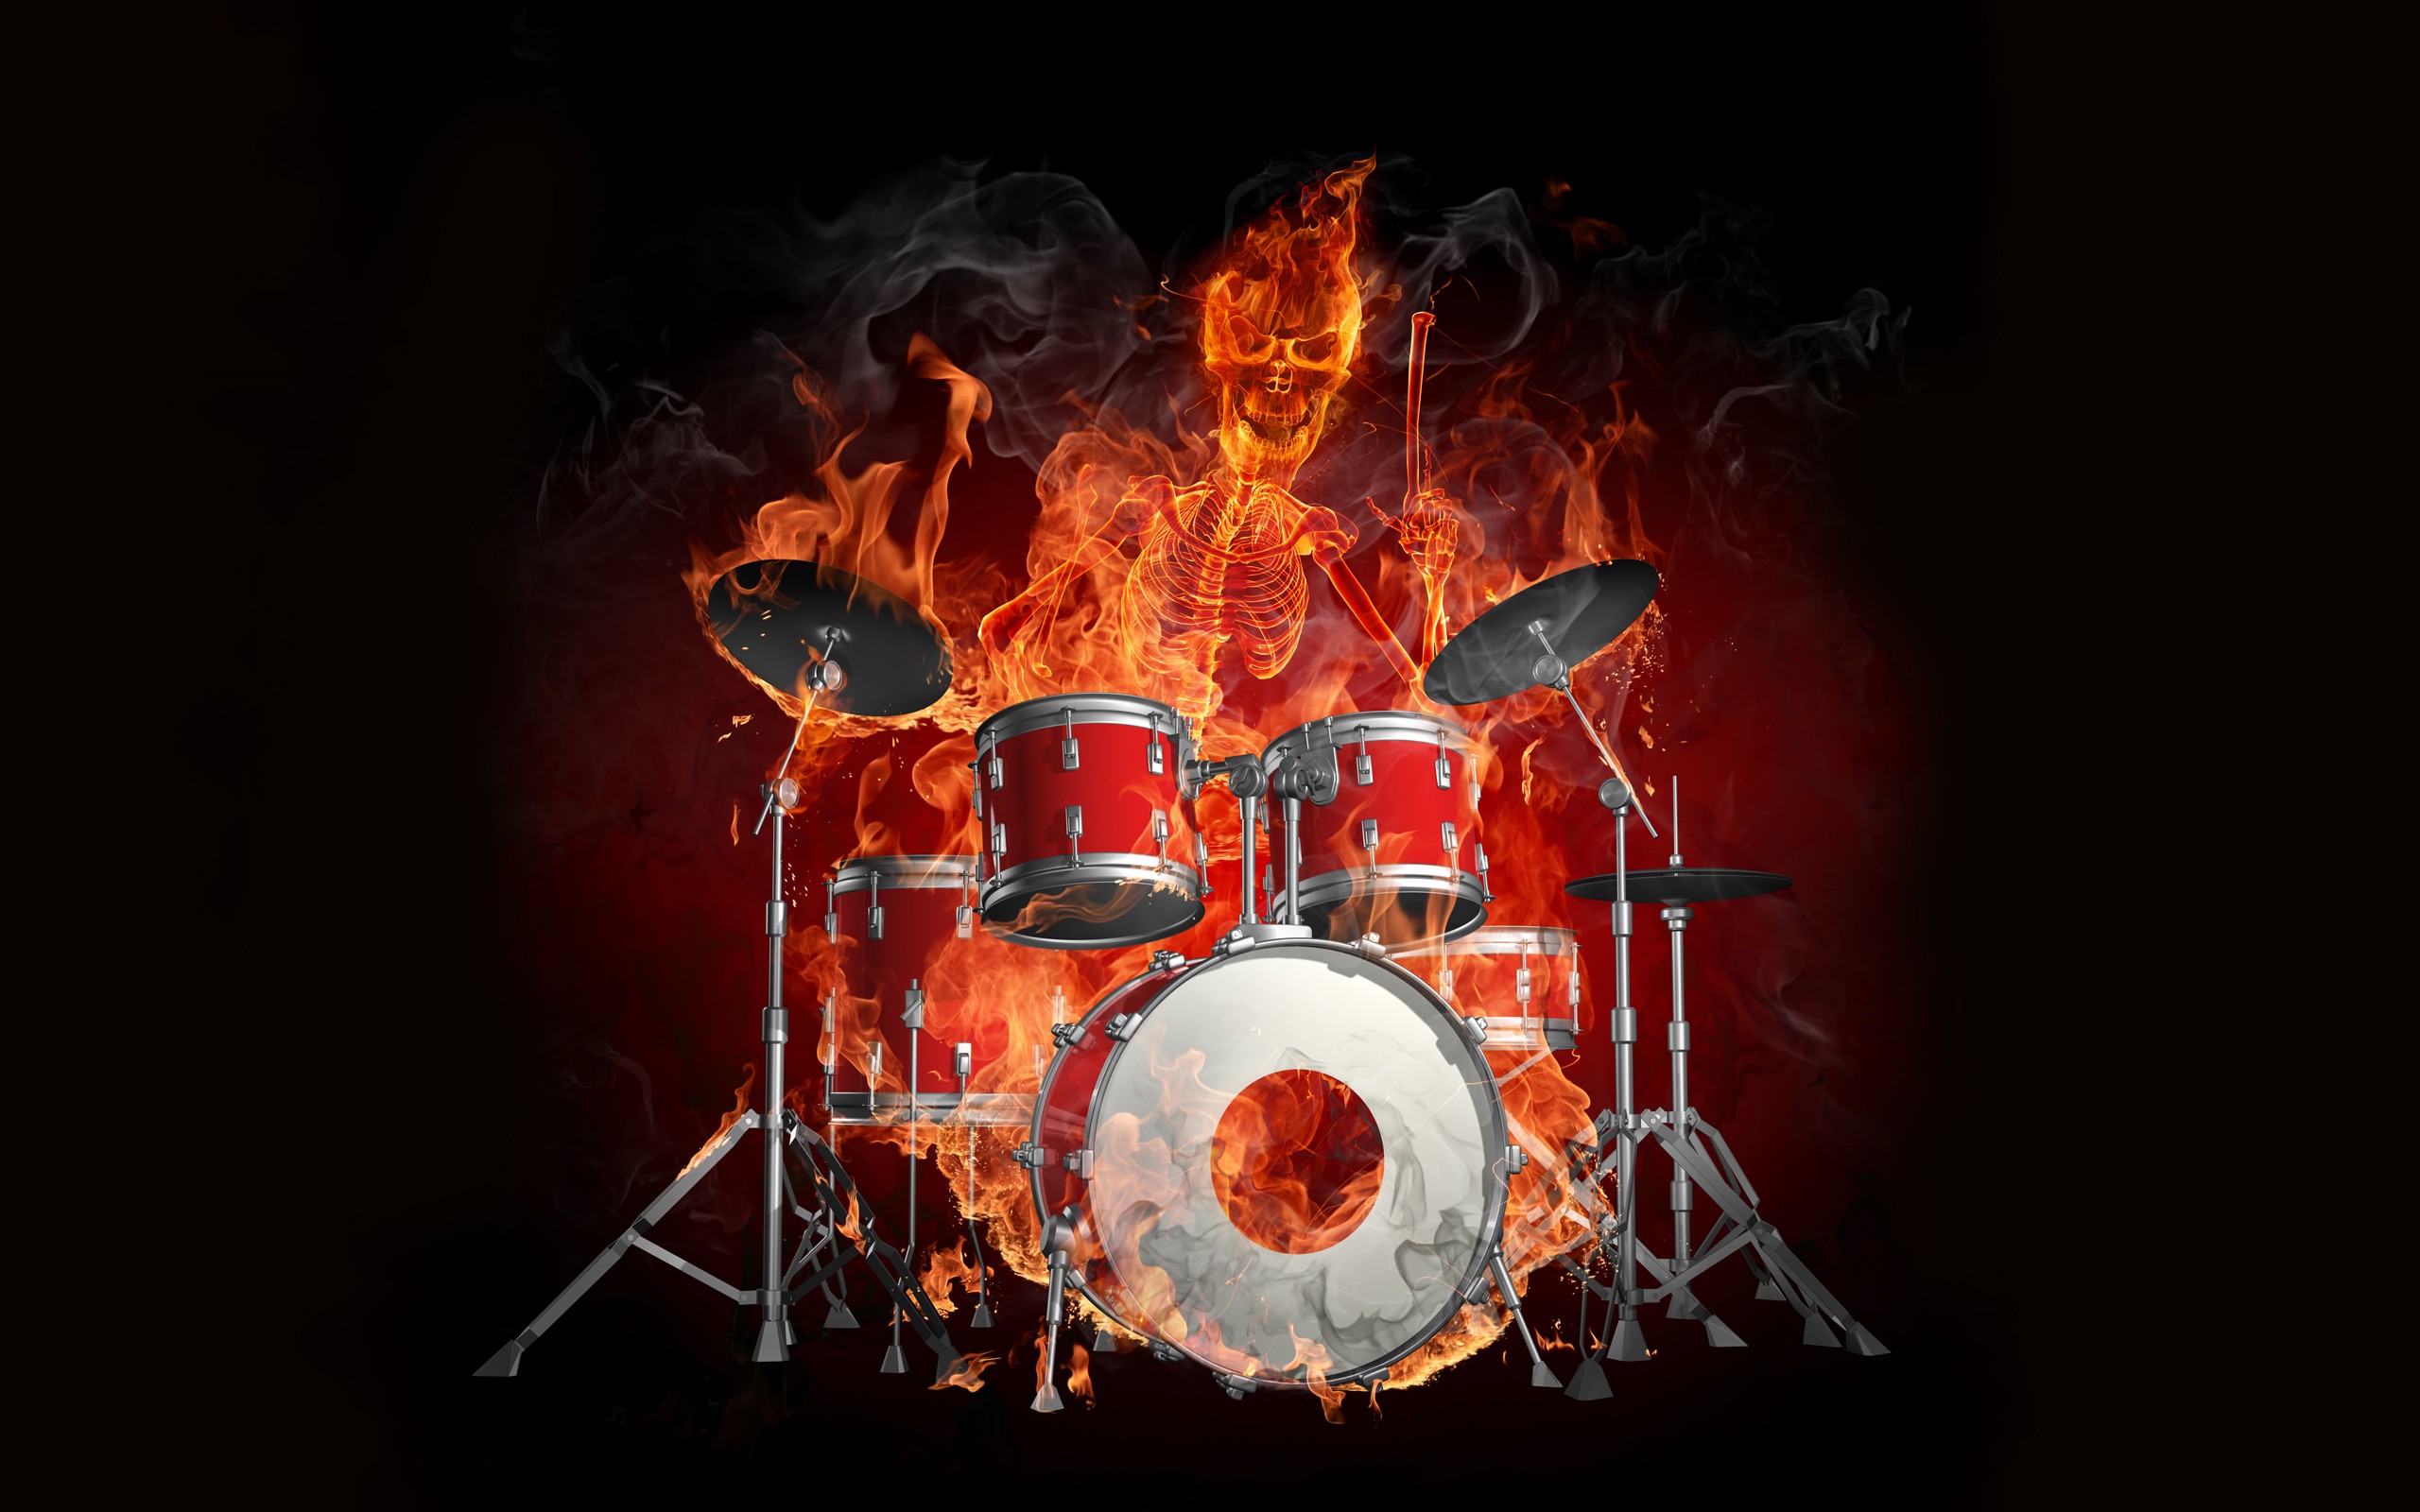 Animated Flames Fire Drums Music Wallpaper Black Background Desktop